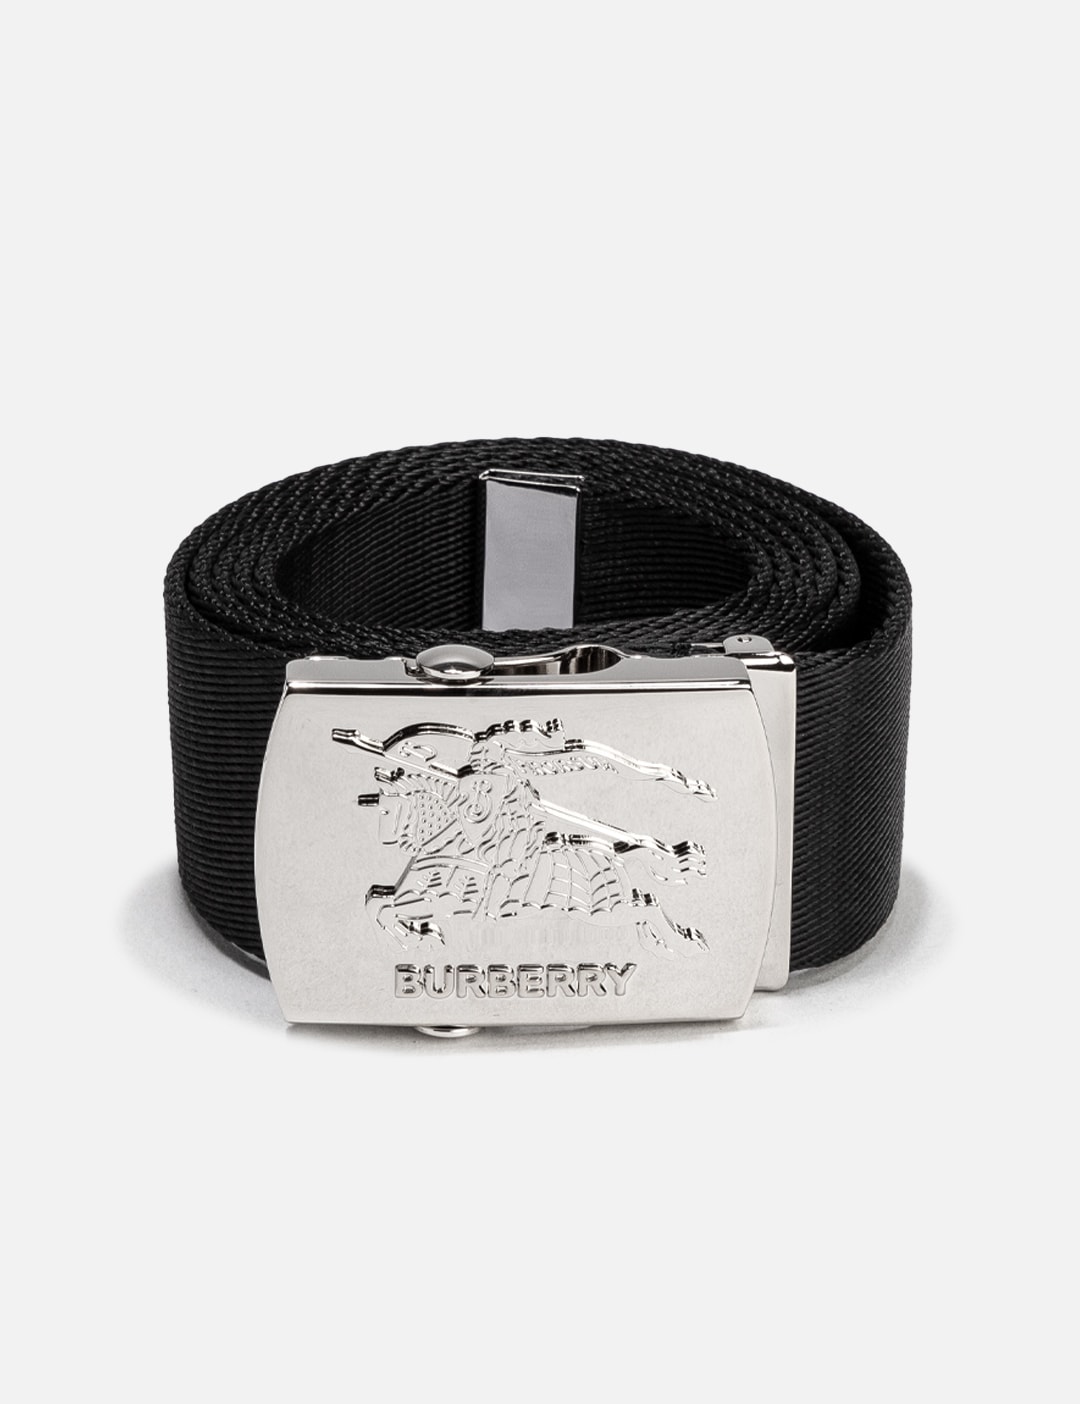 Burberry Black Leather Belt Silvertone Buckle Mens Size 44 110